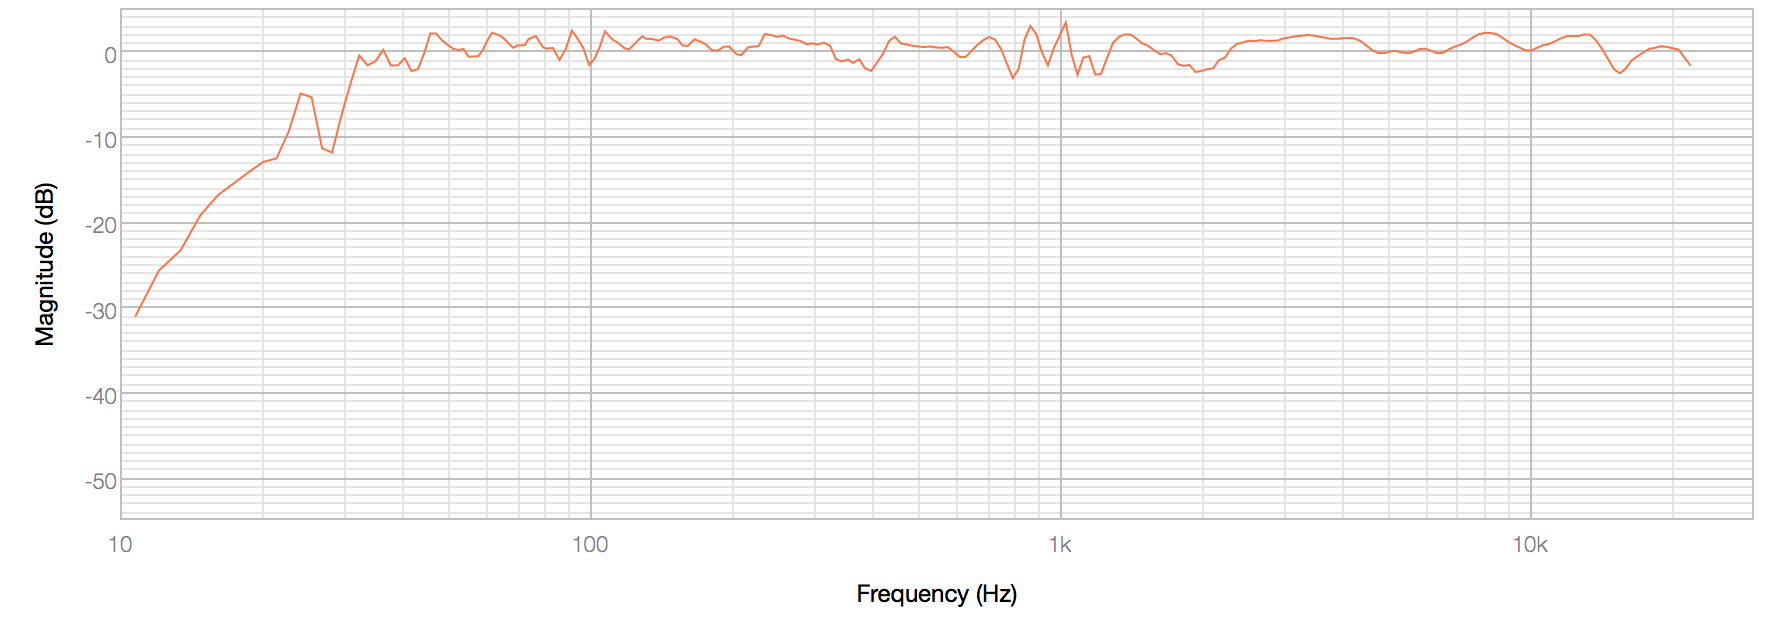 HA-3 Frequency Response